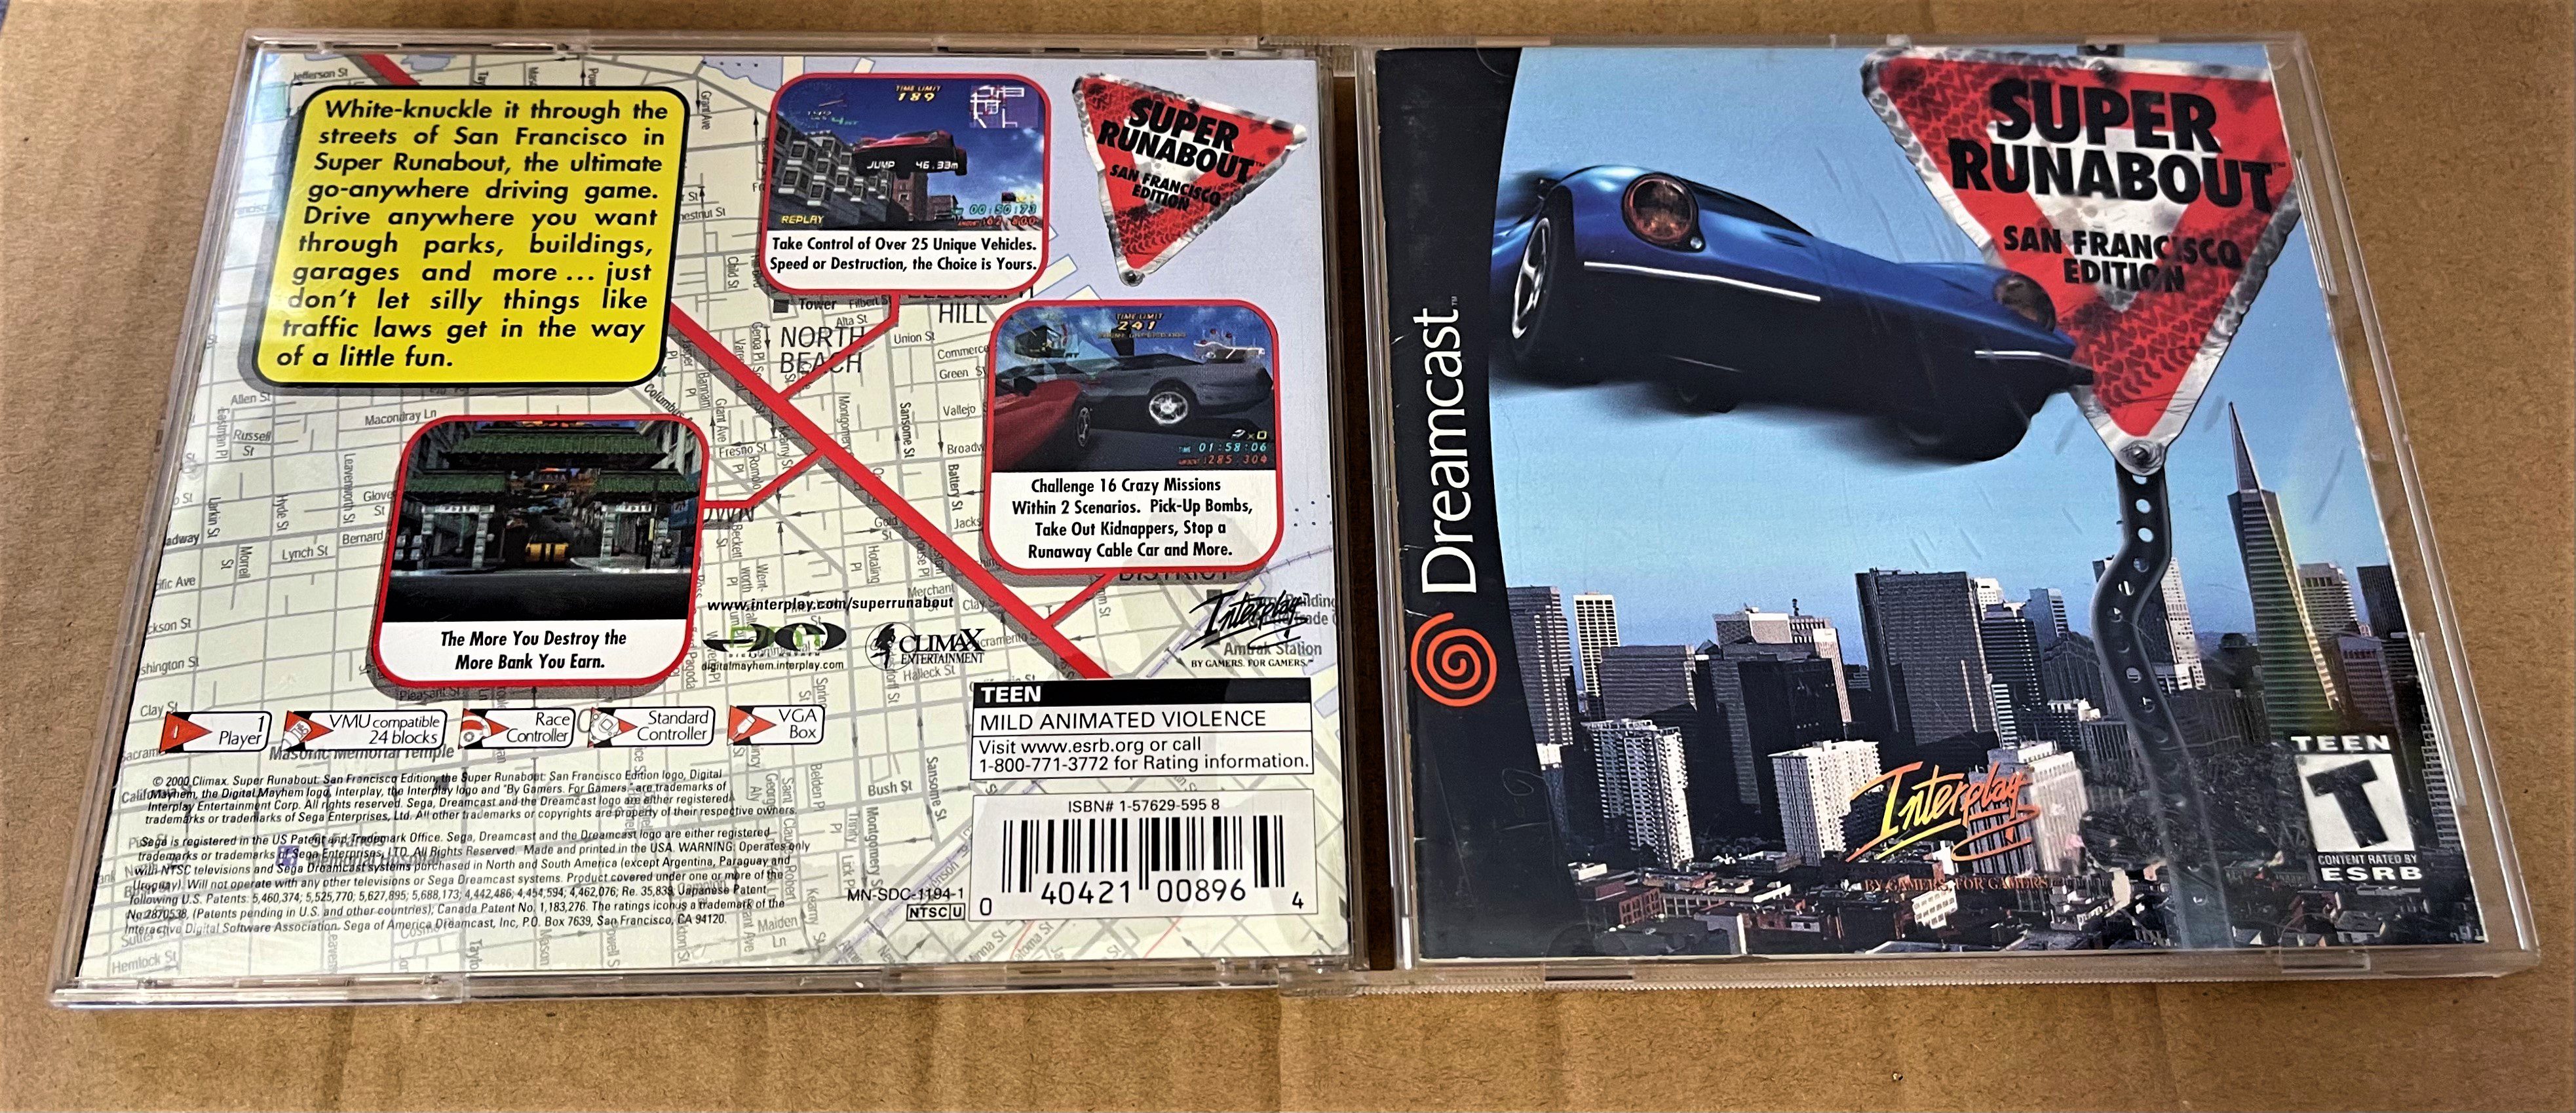 Super Runabout (San Francisco Edition) for Sega Dreamcast